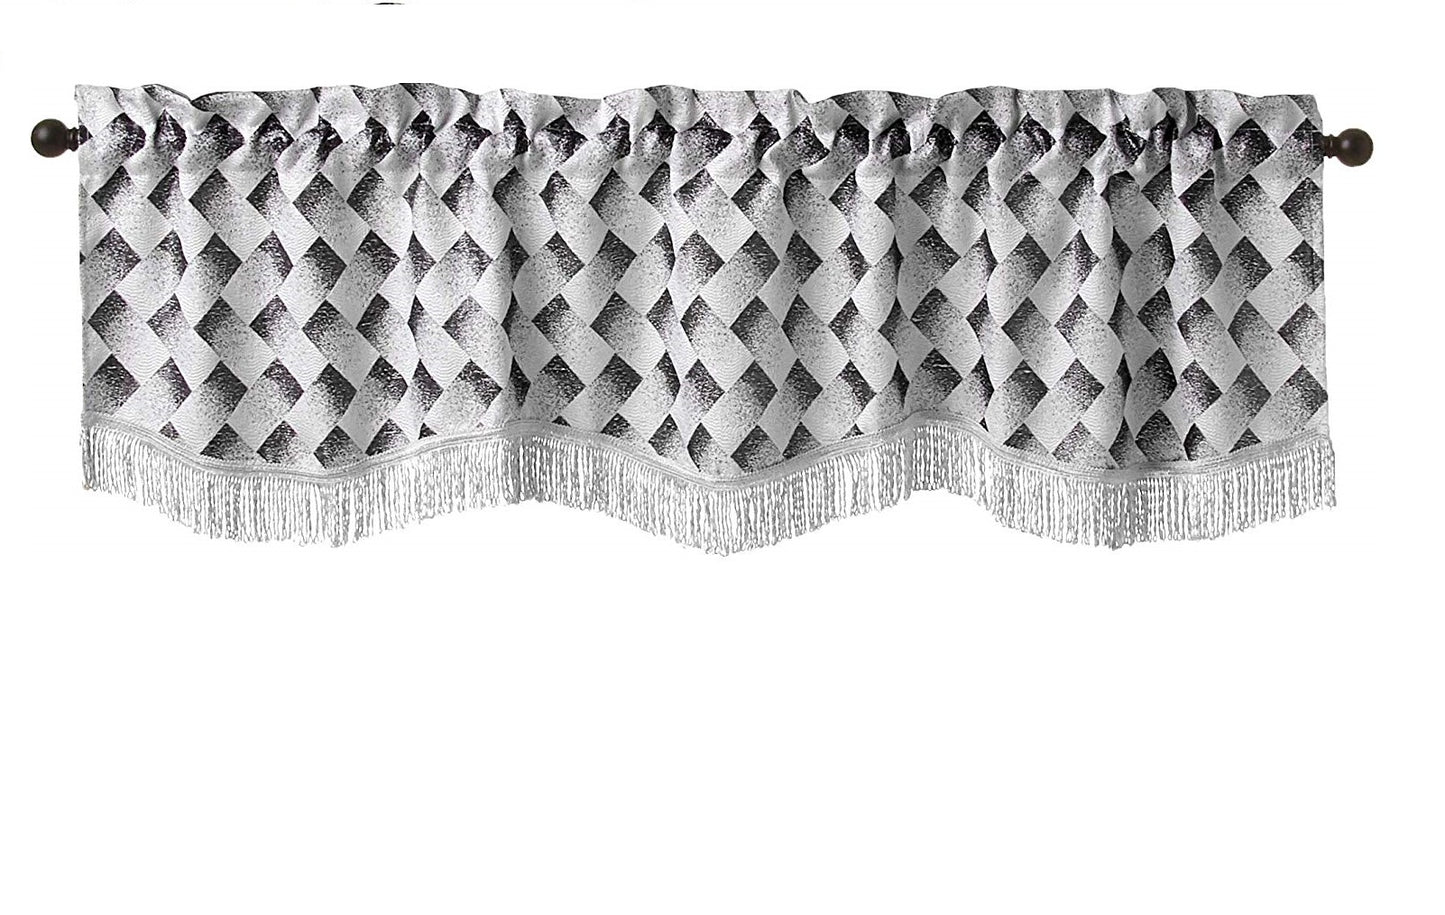 Princess Geometric Abstract Herringbone Blocks Design Decorative Window Treatment Rod Pocket Curtain Straight Valance